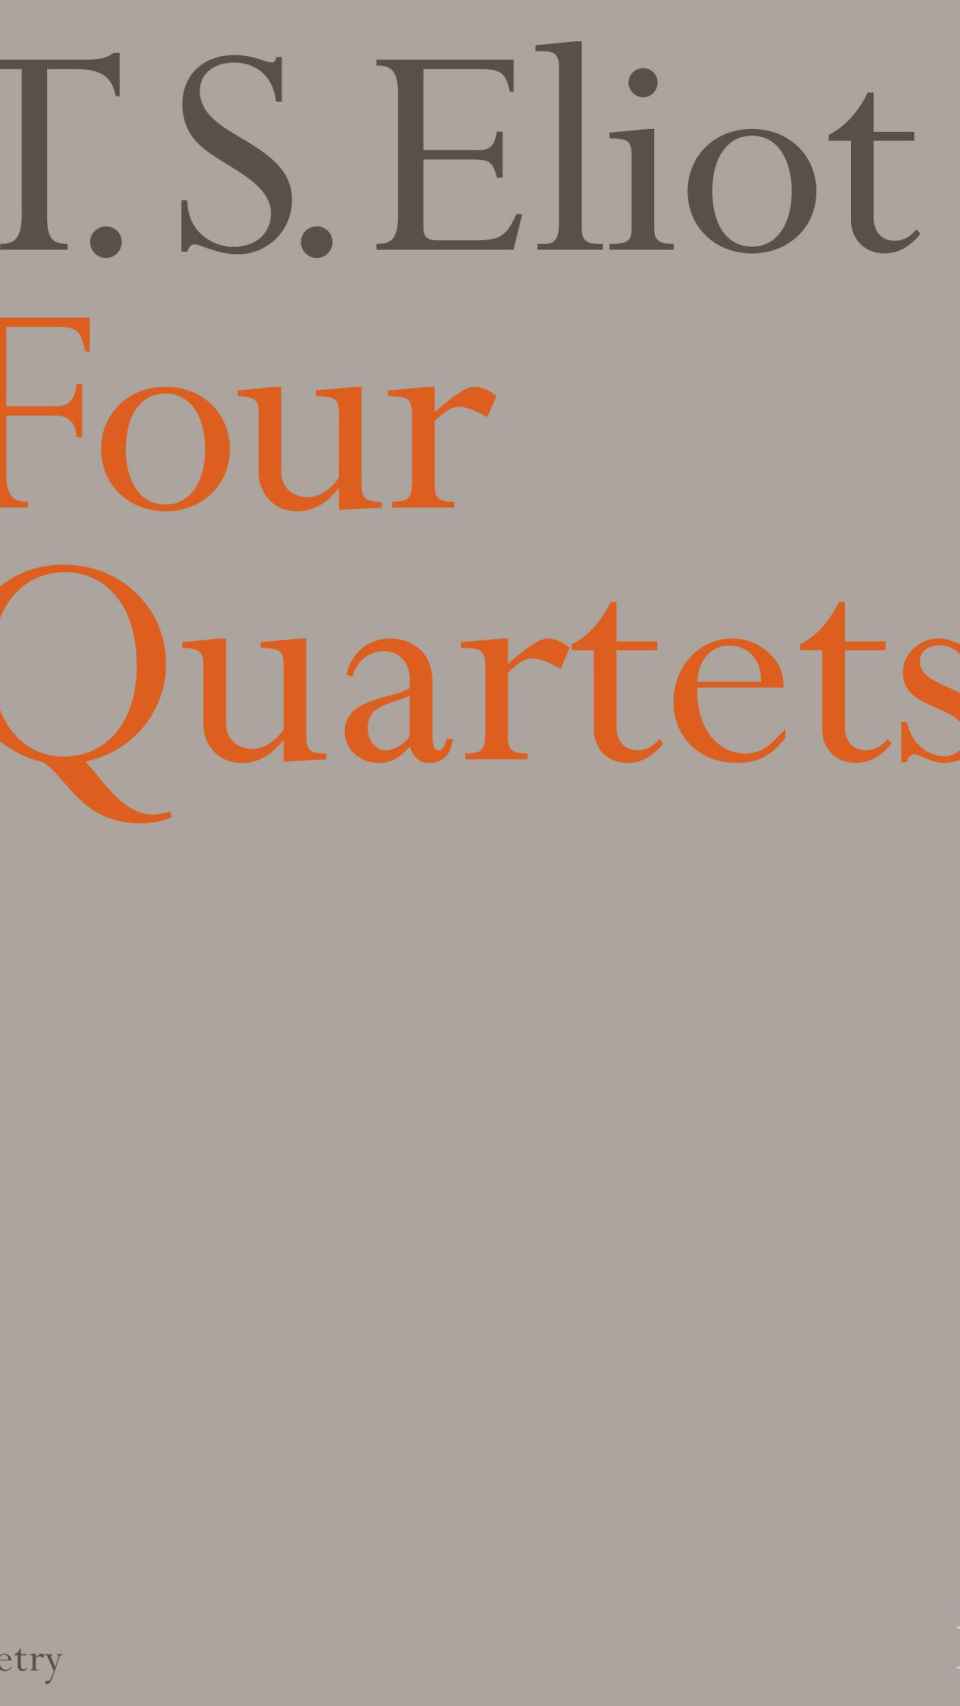 Edición en inglés de los 'Four Quartets'